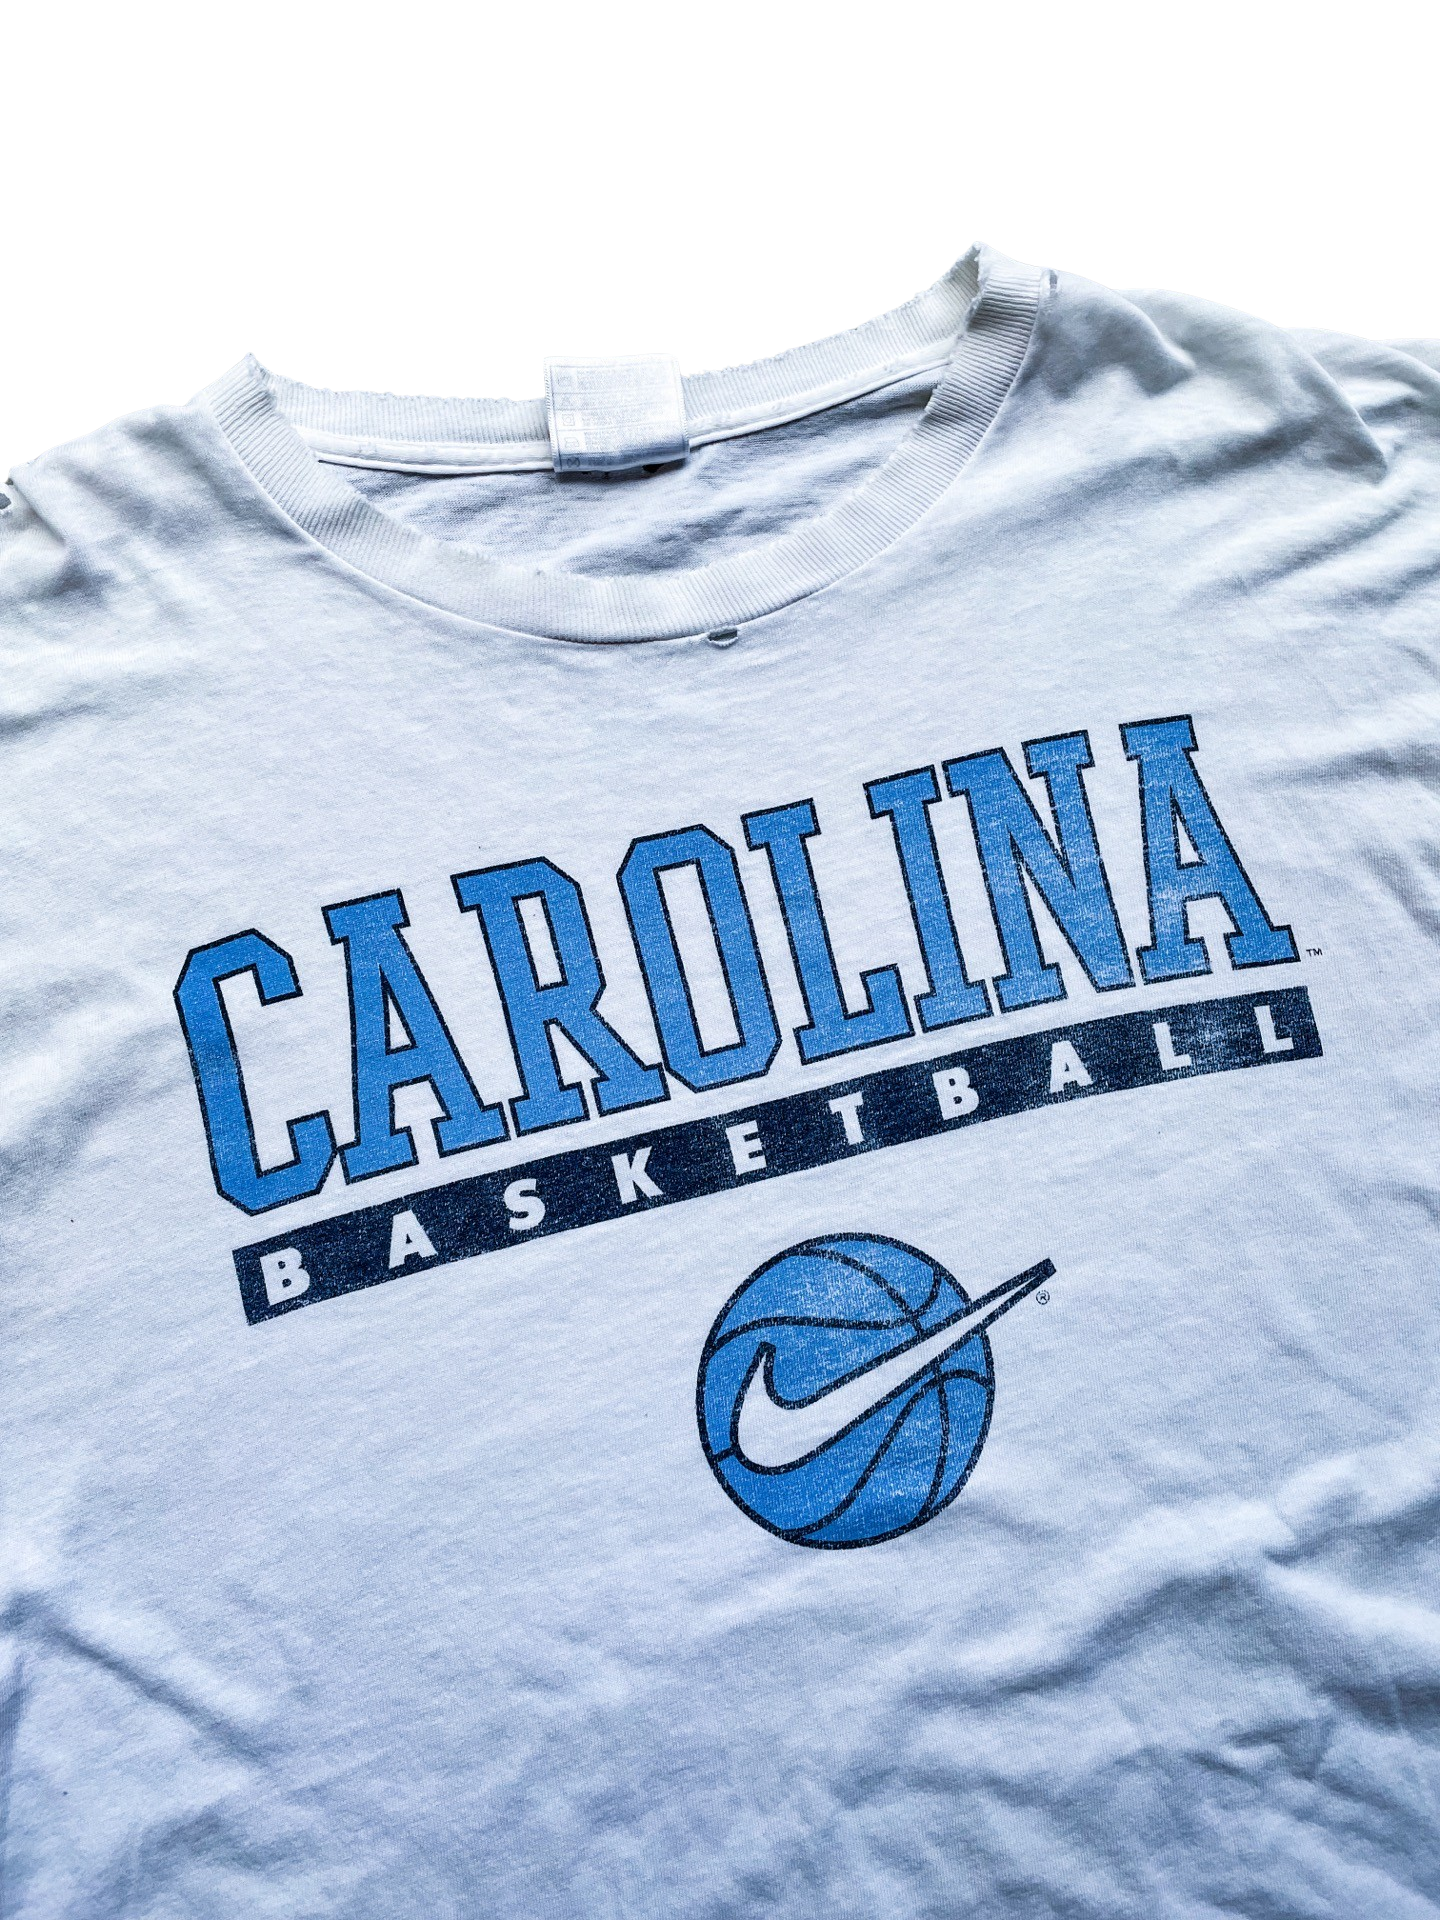 Vintage Nike Carolina t-shirt